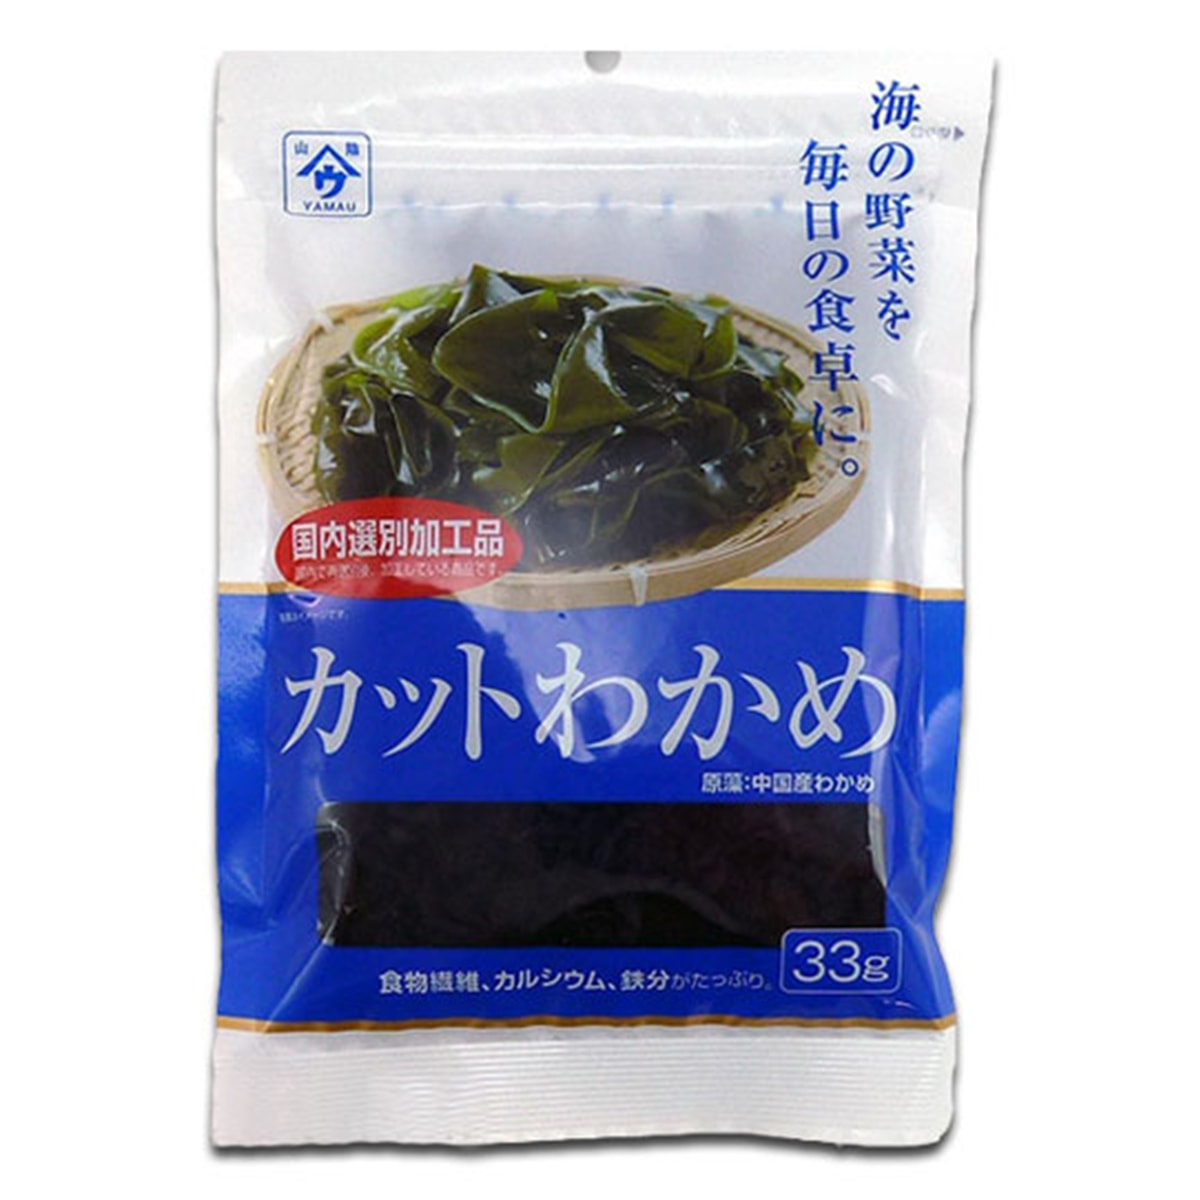 Buy Yamau Dried Wakame Seaweed - 24 gm